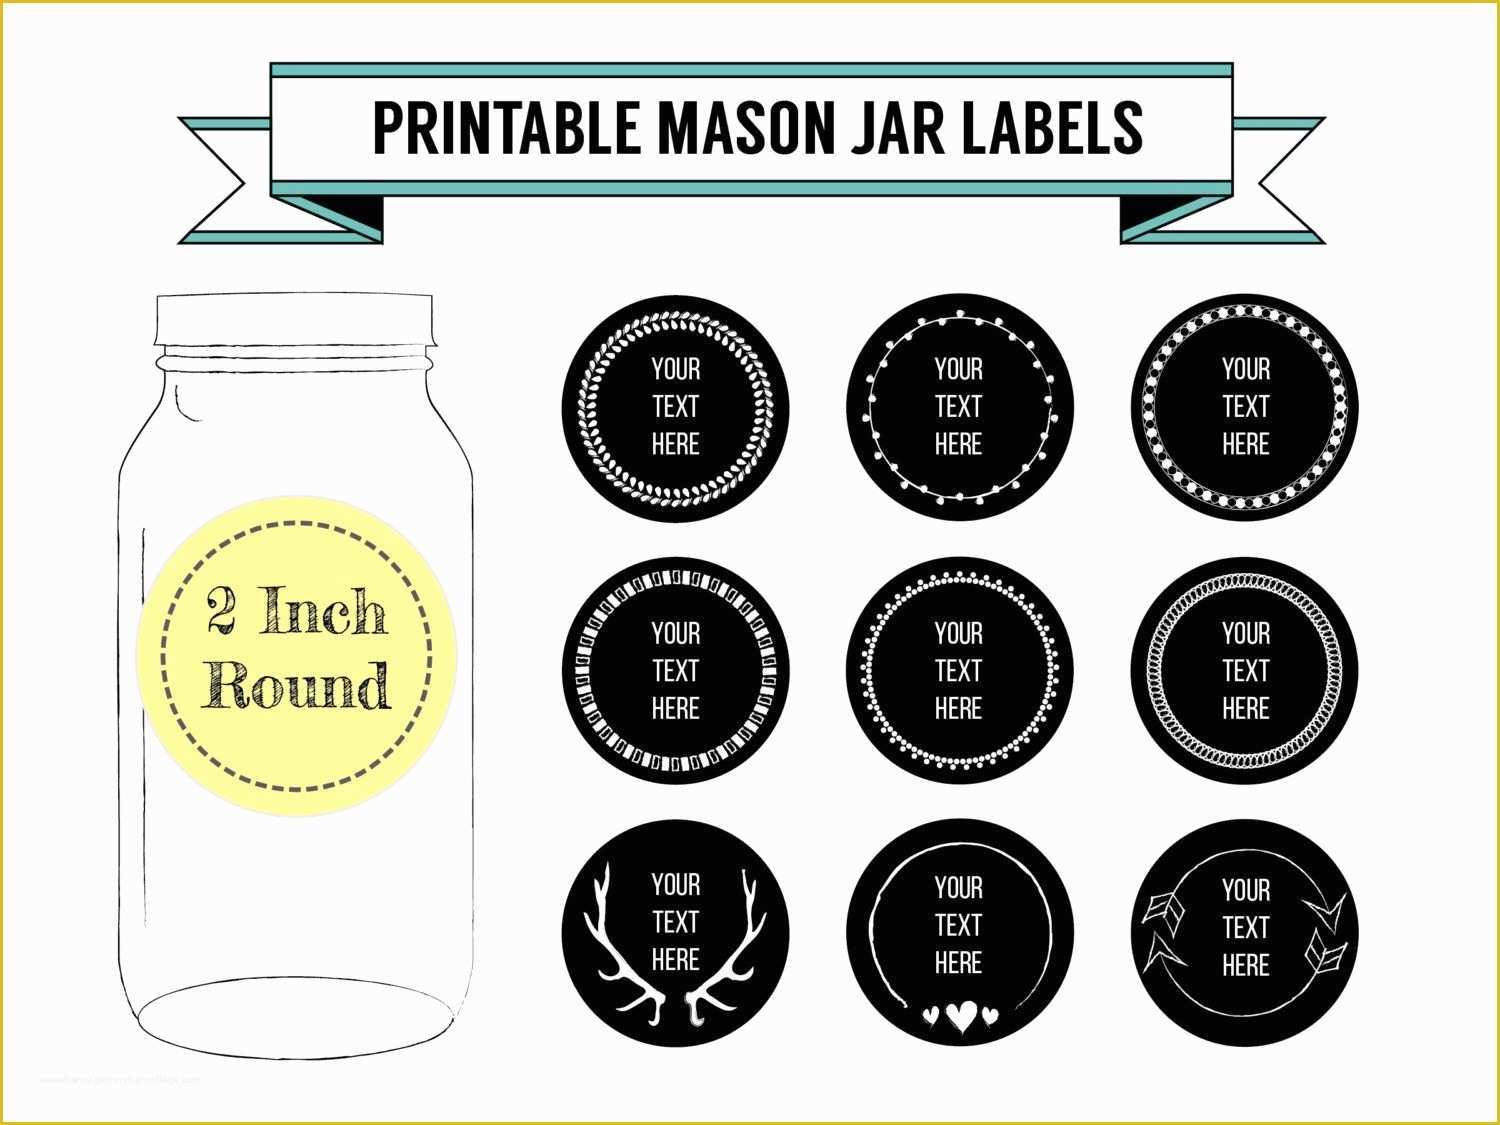 Our Best Gallery of Free Mason Jar Label Templates Of 56 Cute Mason Jar Lab...